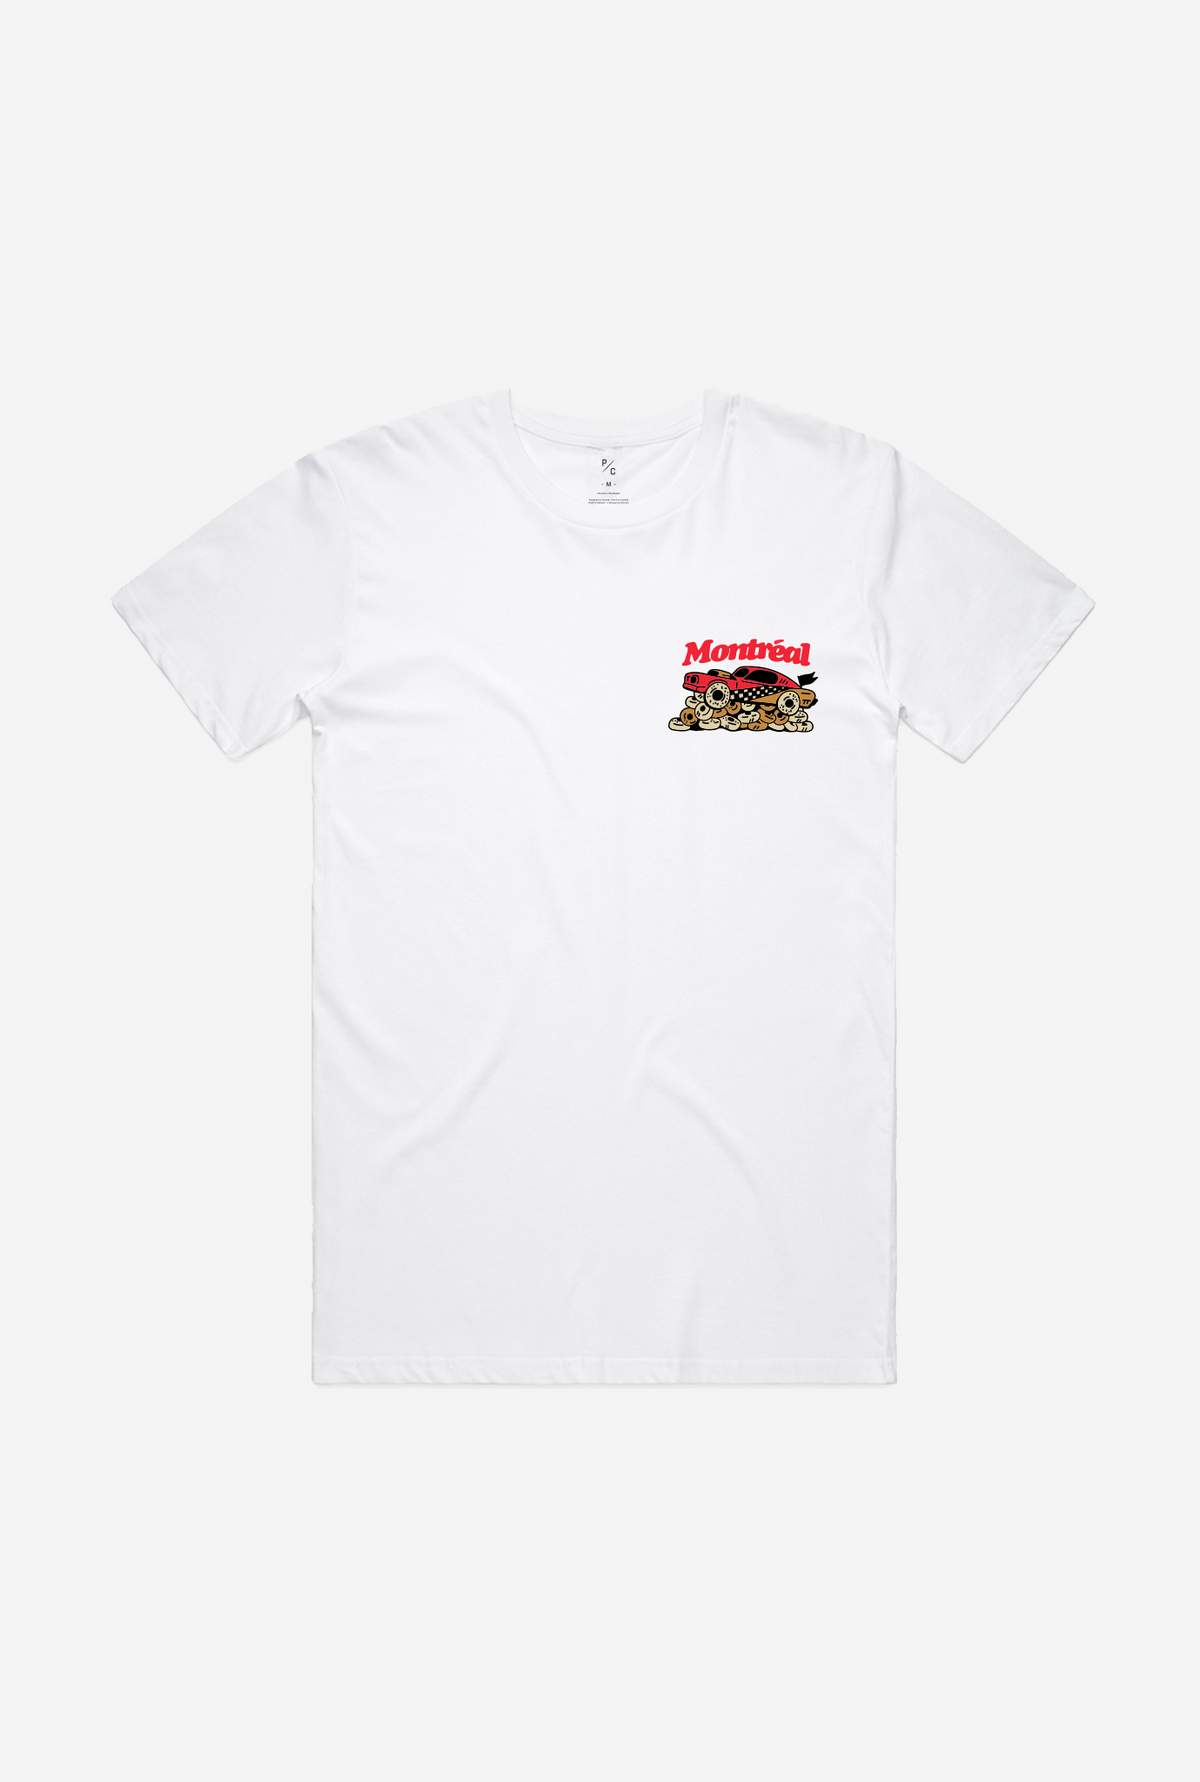 Montreal Grande Prix Bagel Shop T-Shirt - White